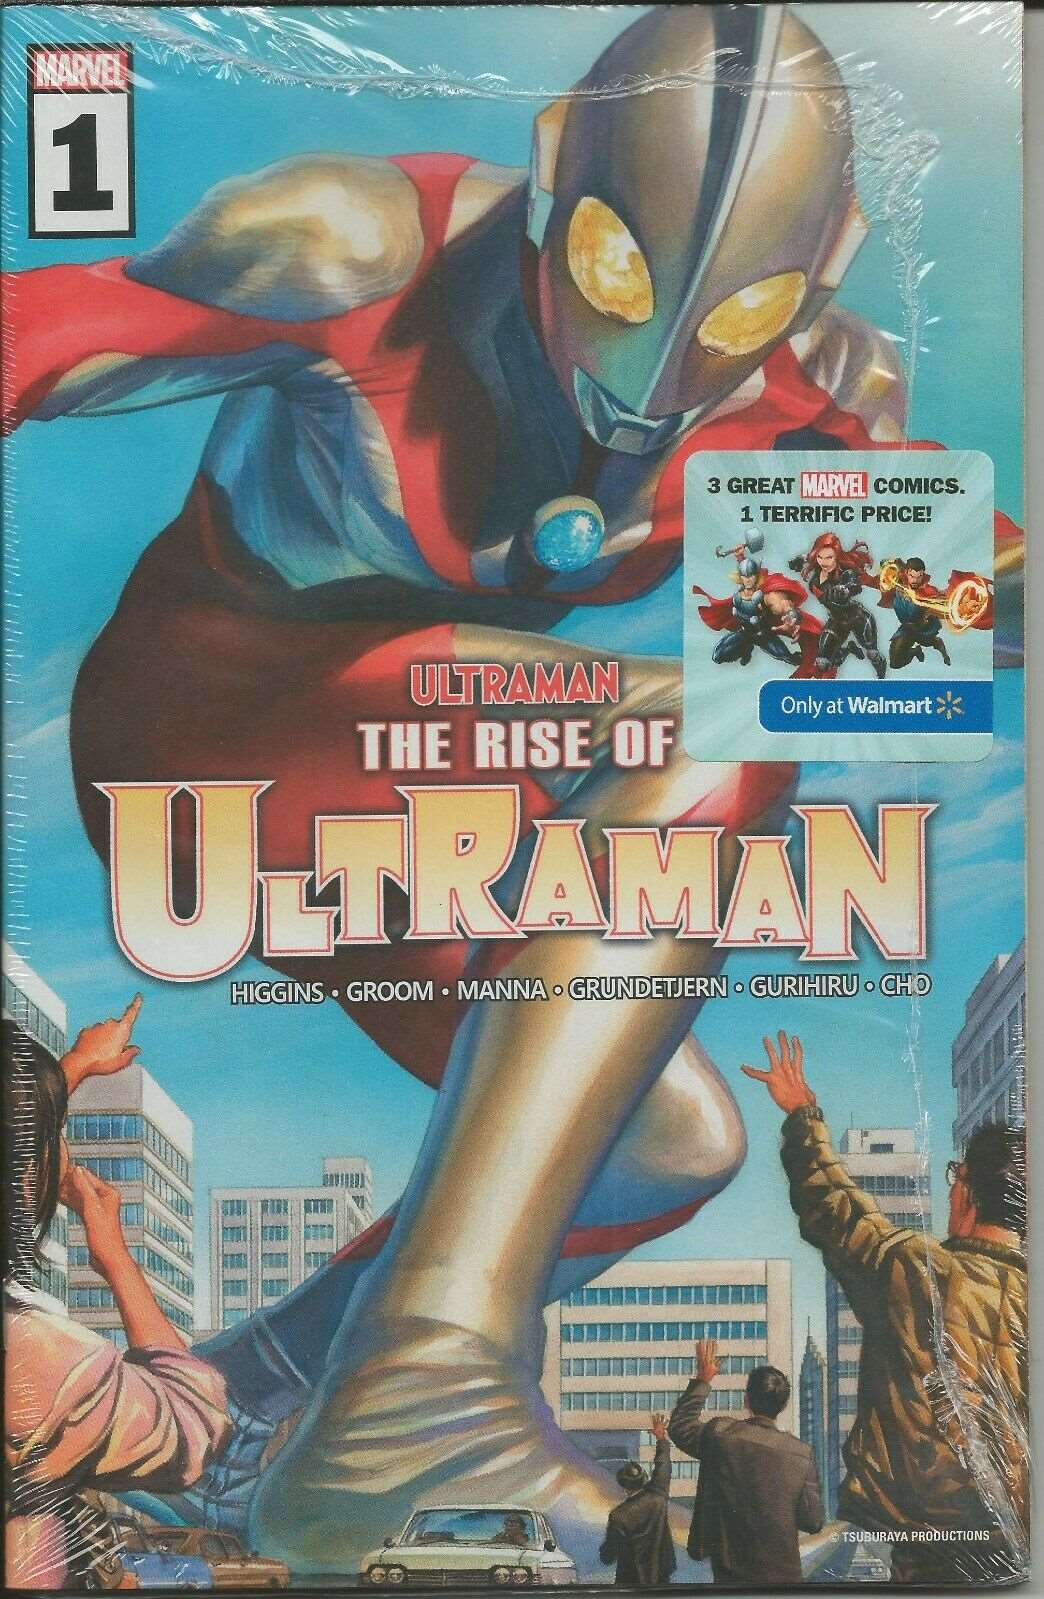 marvel comics the rise of ultraman issue 1 walmart comic 3 pack